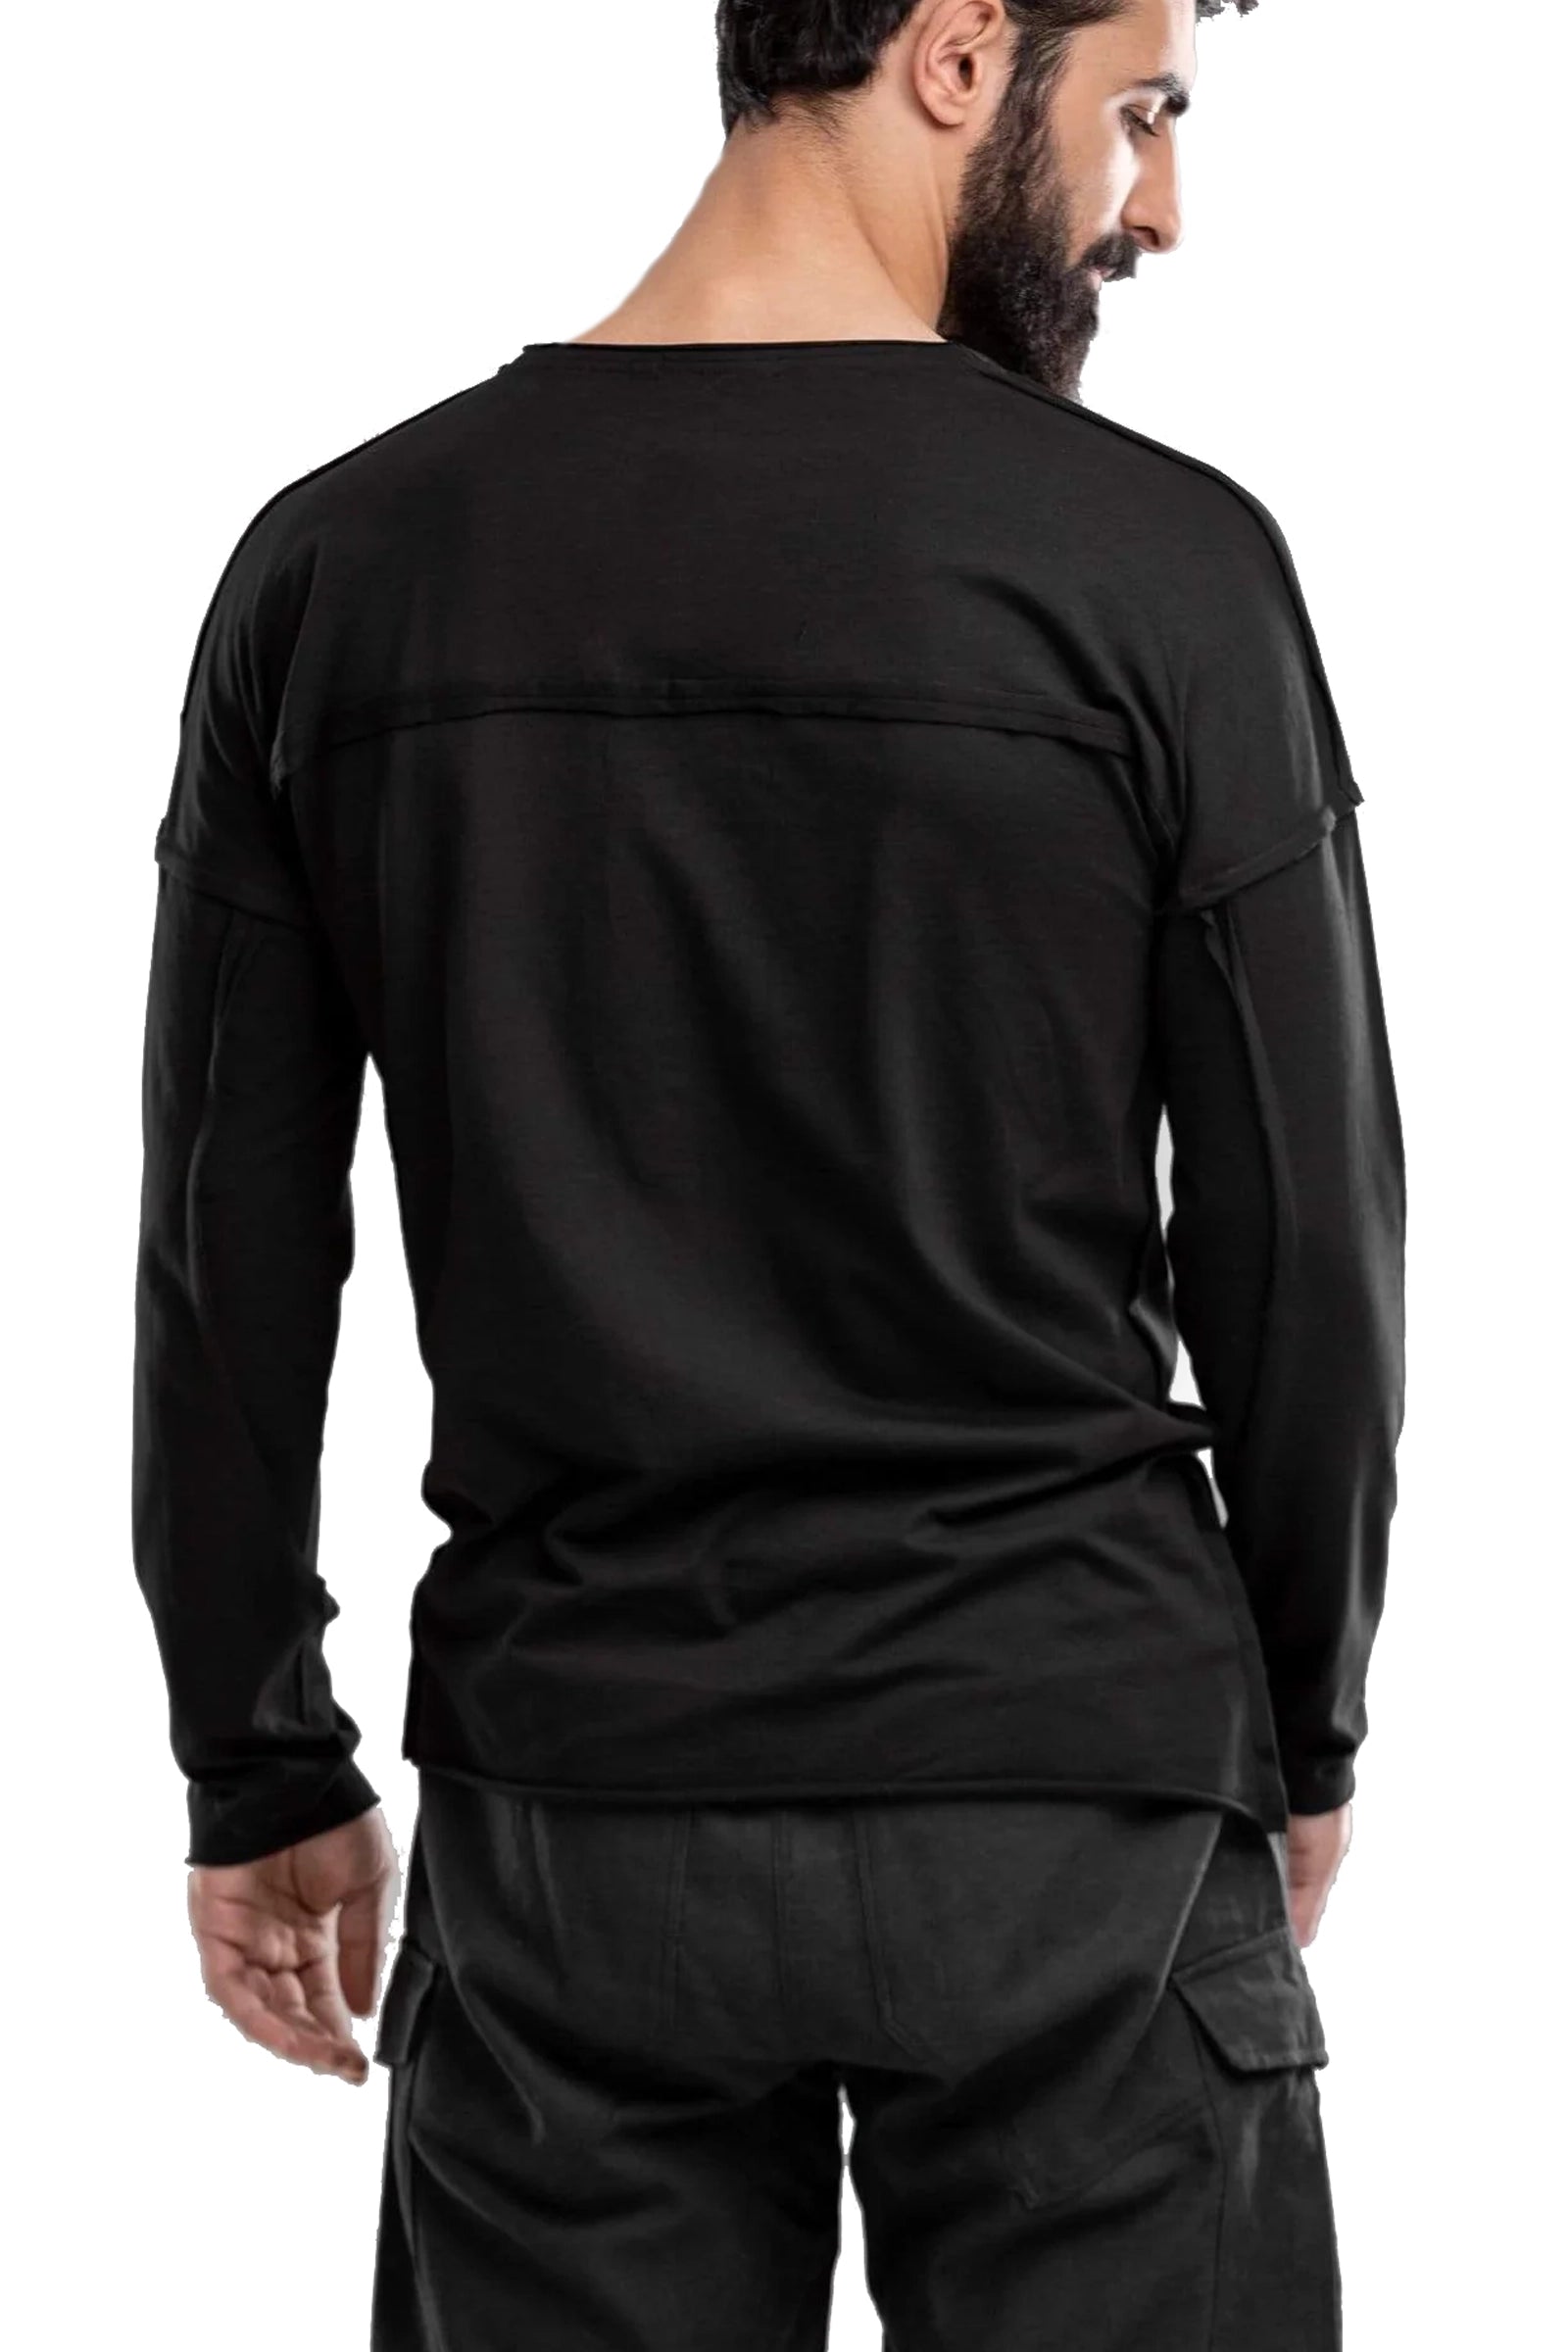 Bundle: 3x Black Long Sleeve T-shirt